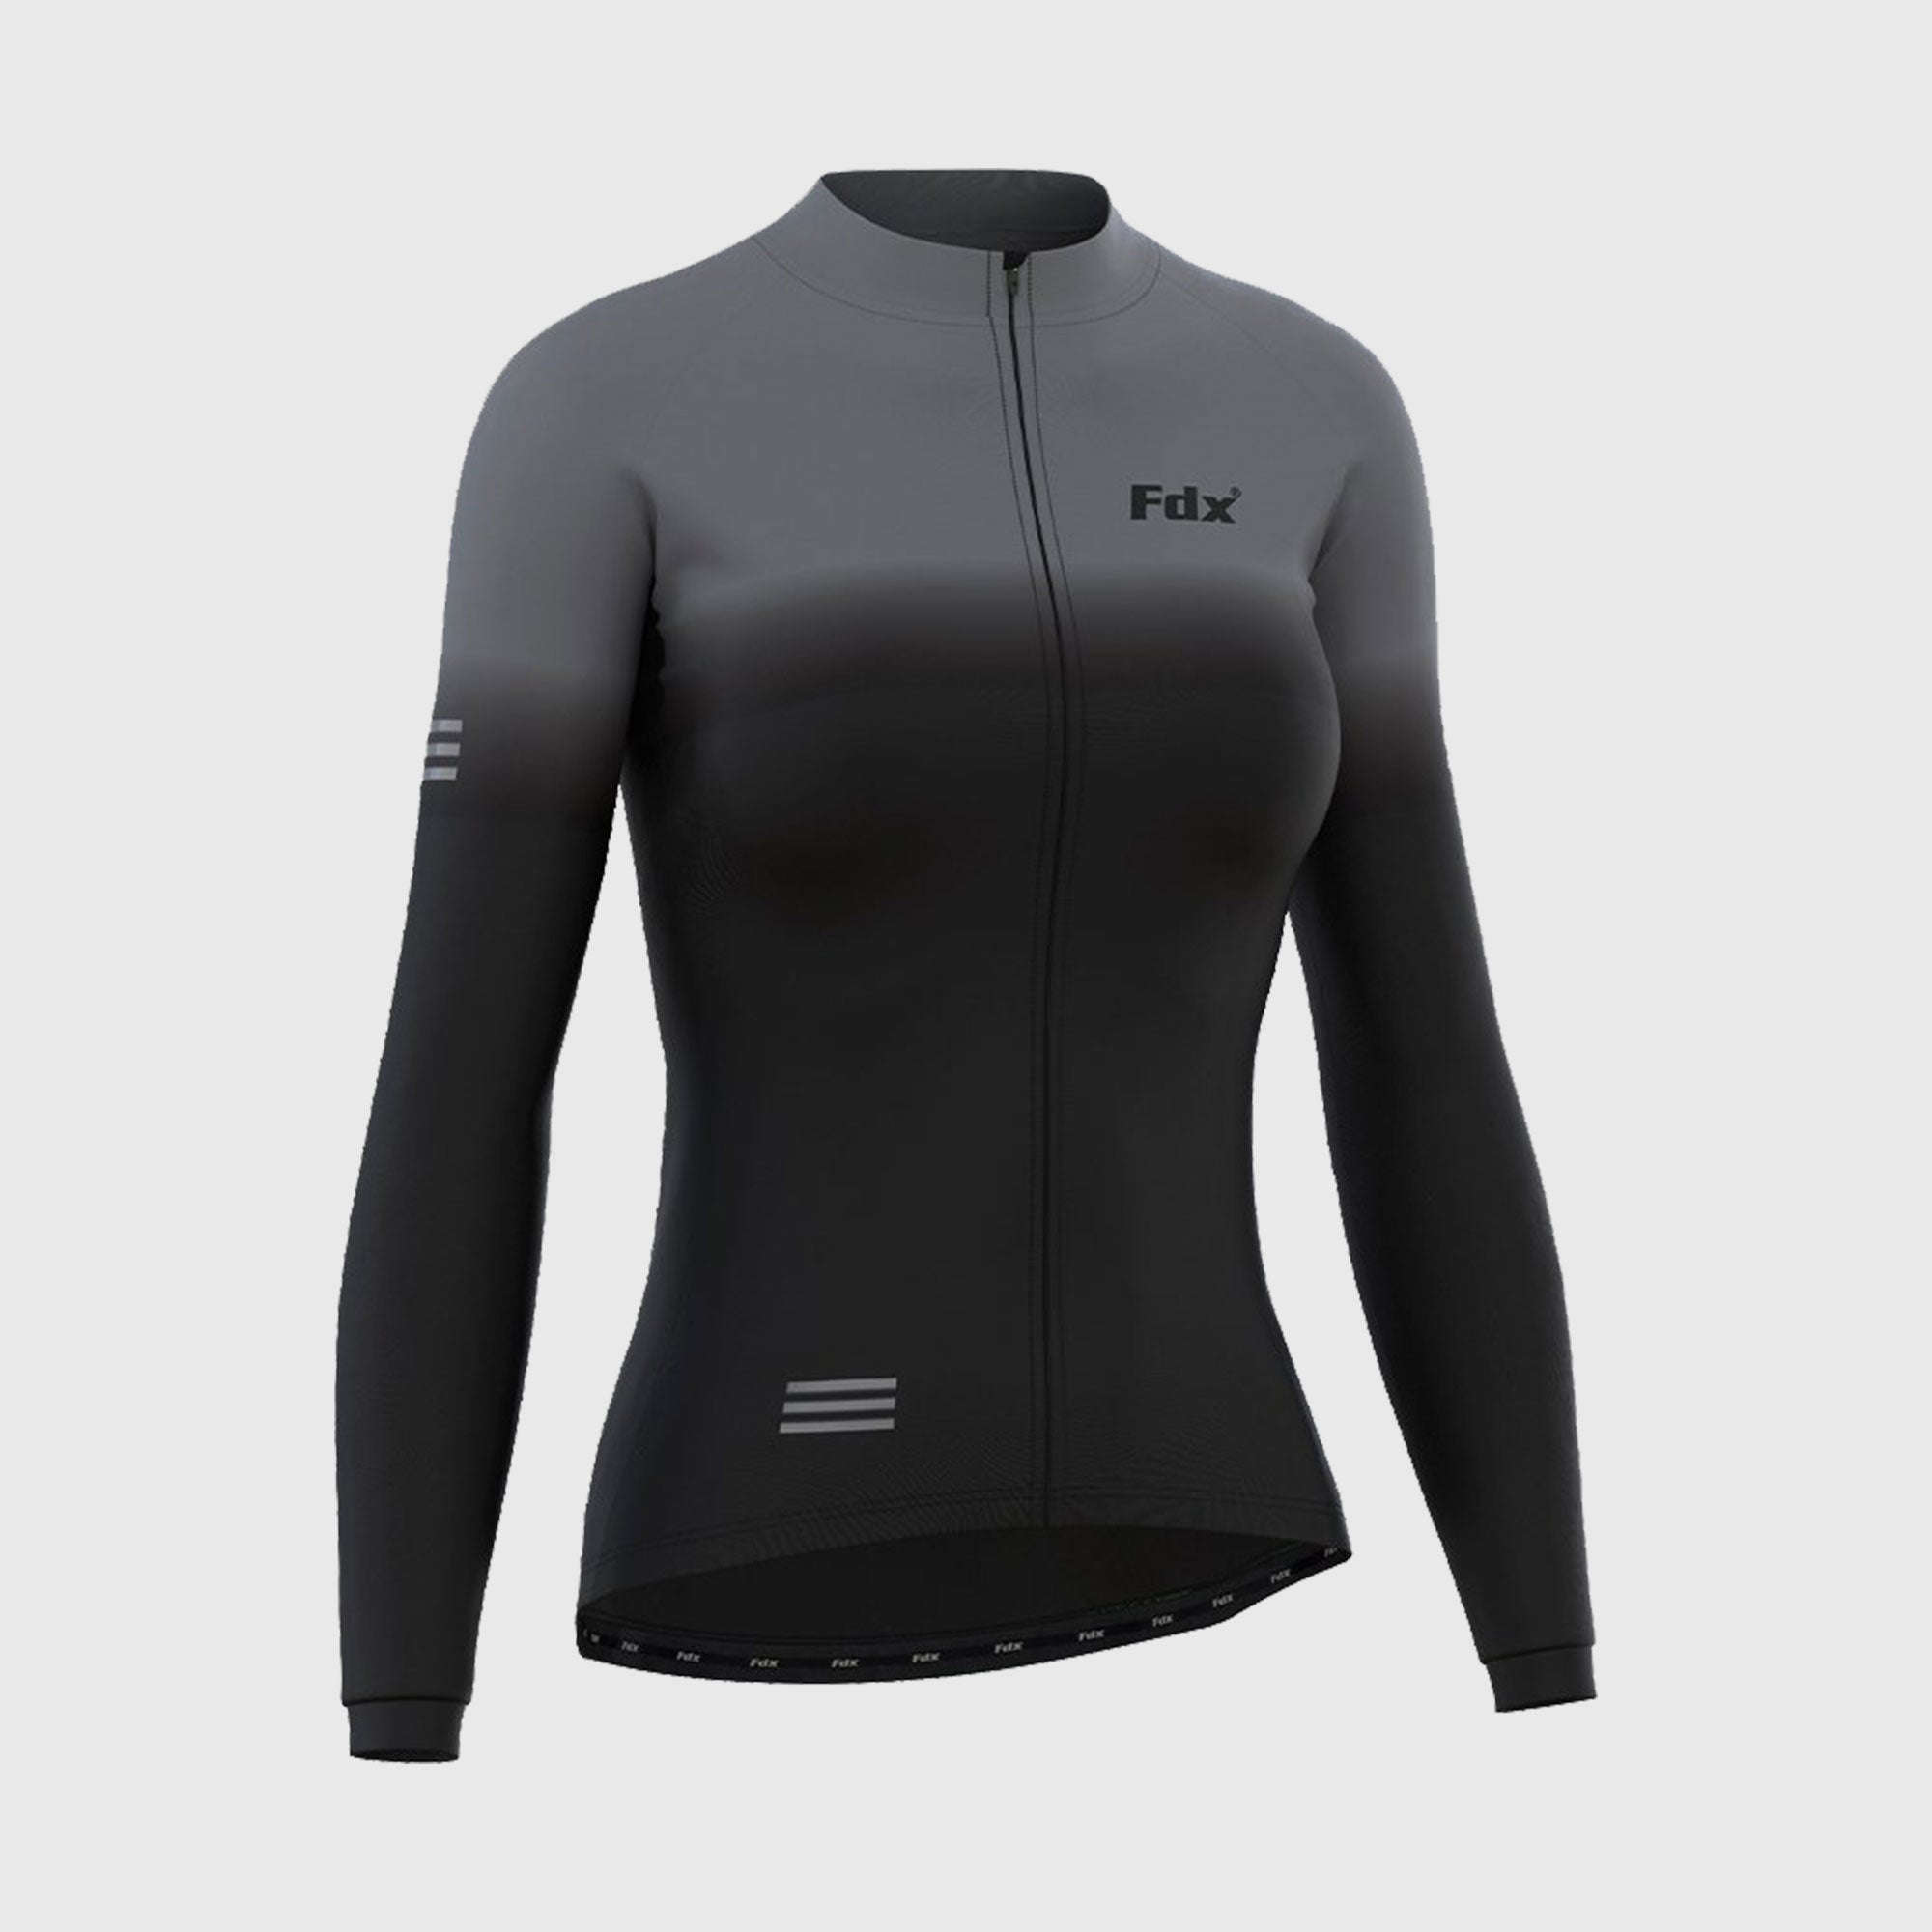 Fdx Best Women's Black & Grey Long Sleeve Cycling Jersey for Winter Roubaix Thermal Fleece Shirt Road Bike Wear Top Full Zipper, Lightweight  Pockets & Hi viz Reflectors - Duo